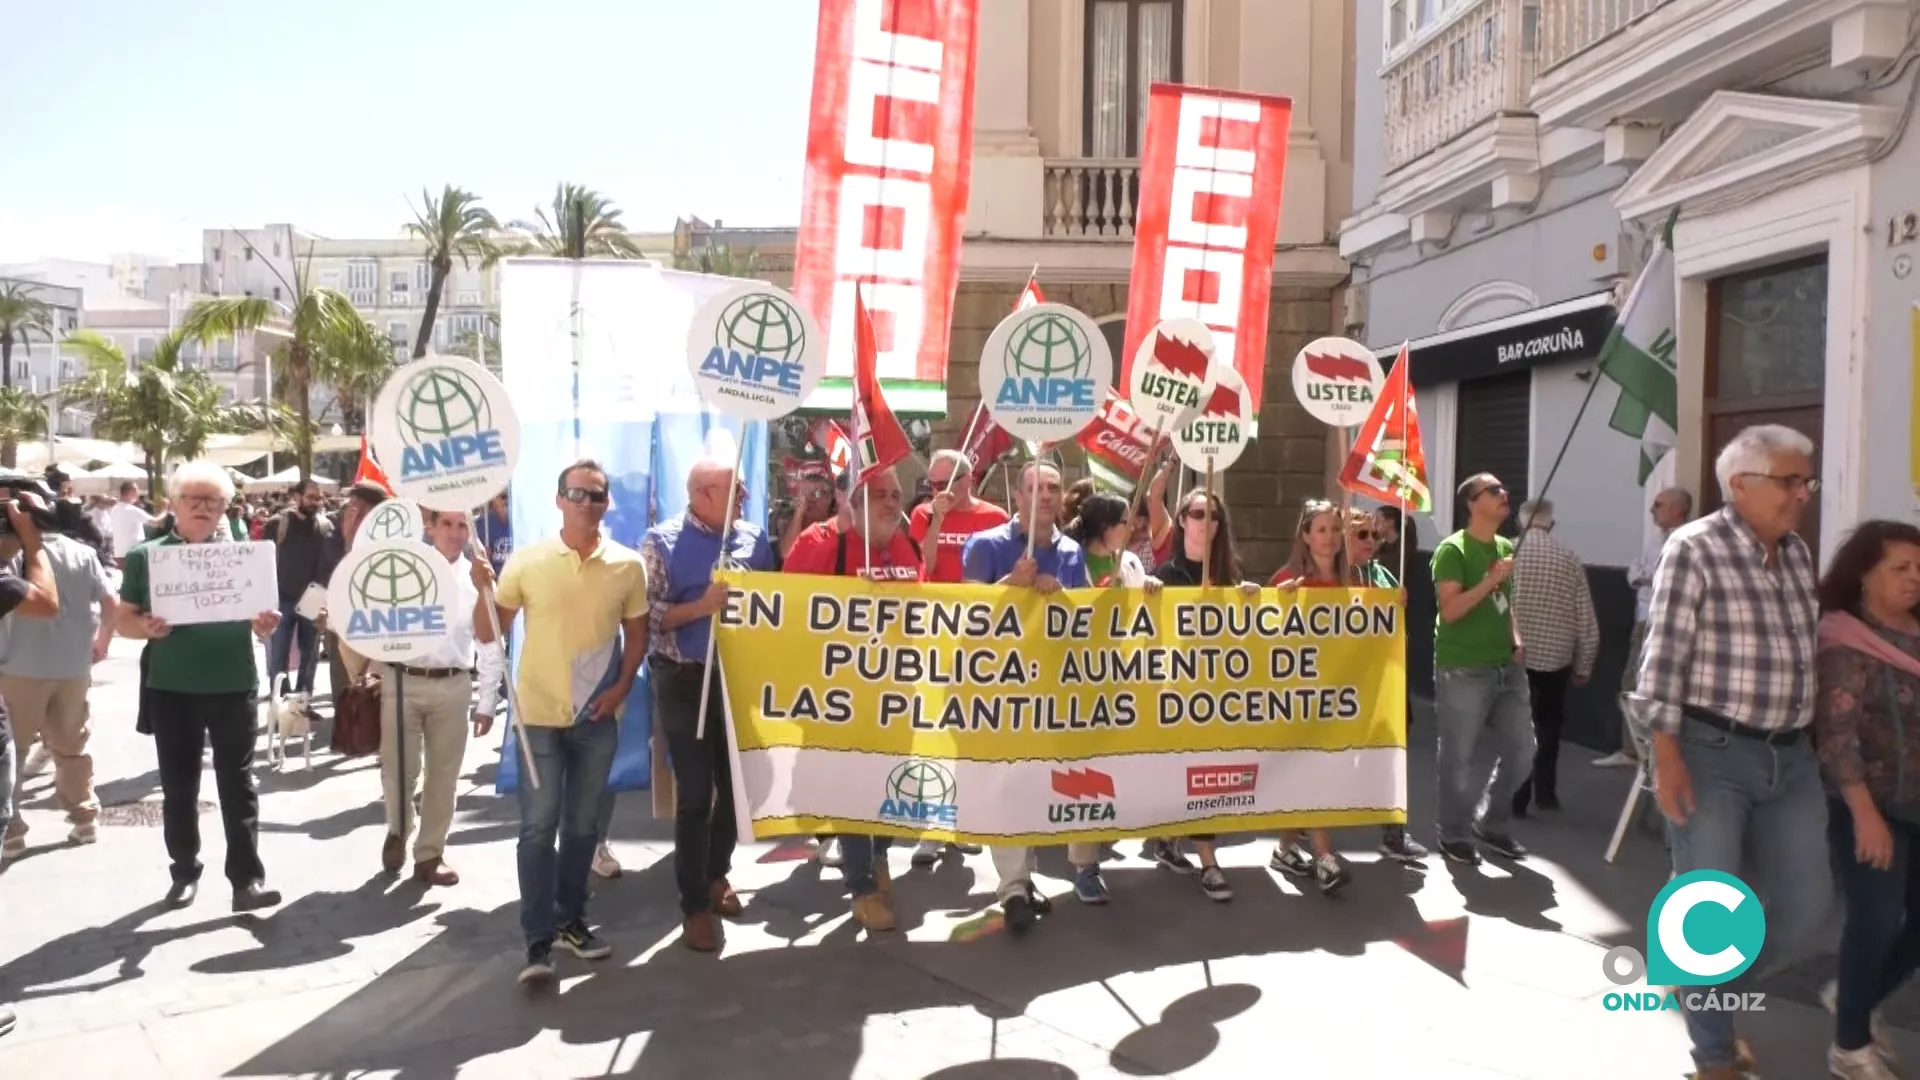 Un total de 108.000 docentes de la enseñanza pública en Andalucía estaban llamados a secundar la huelga. 